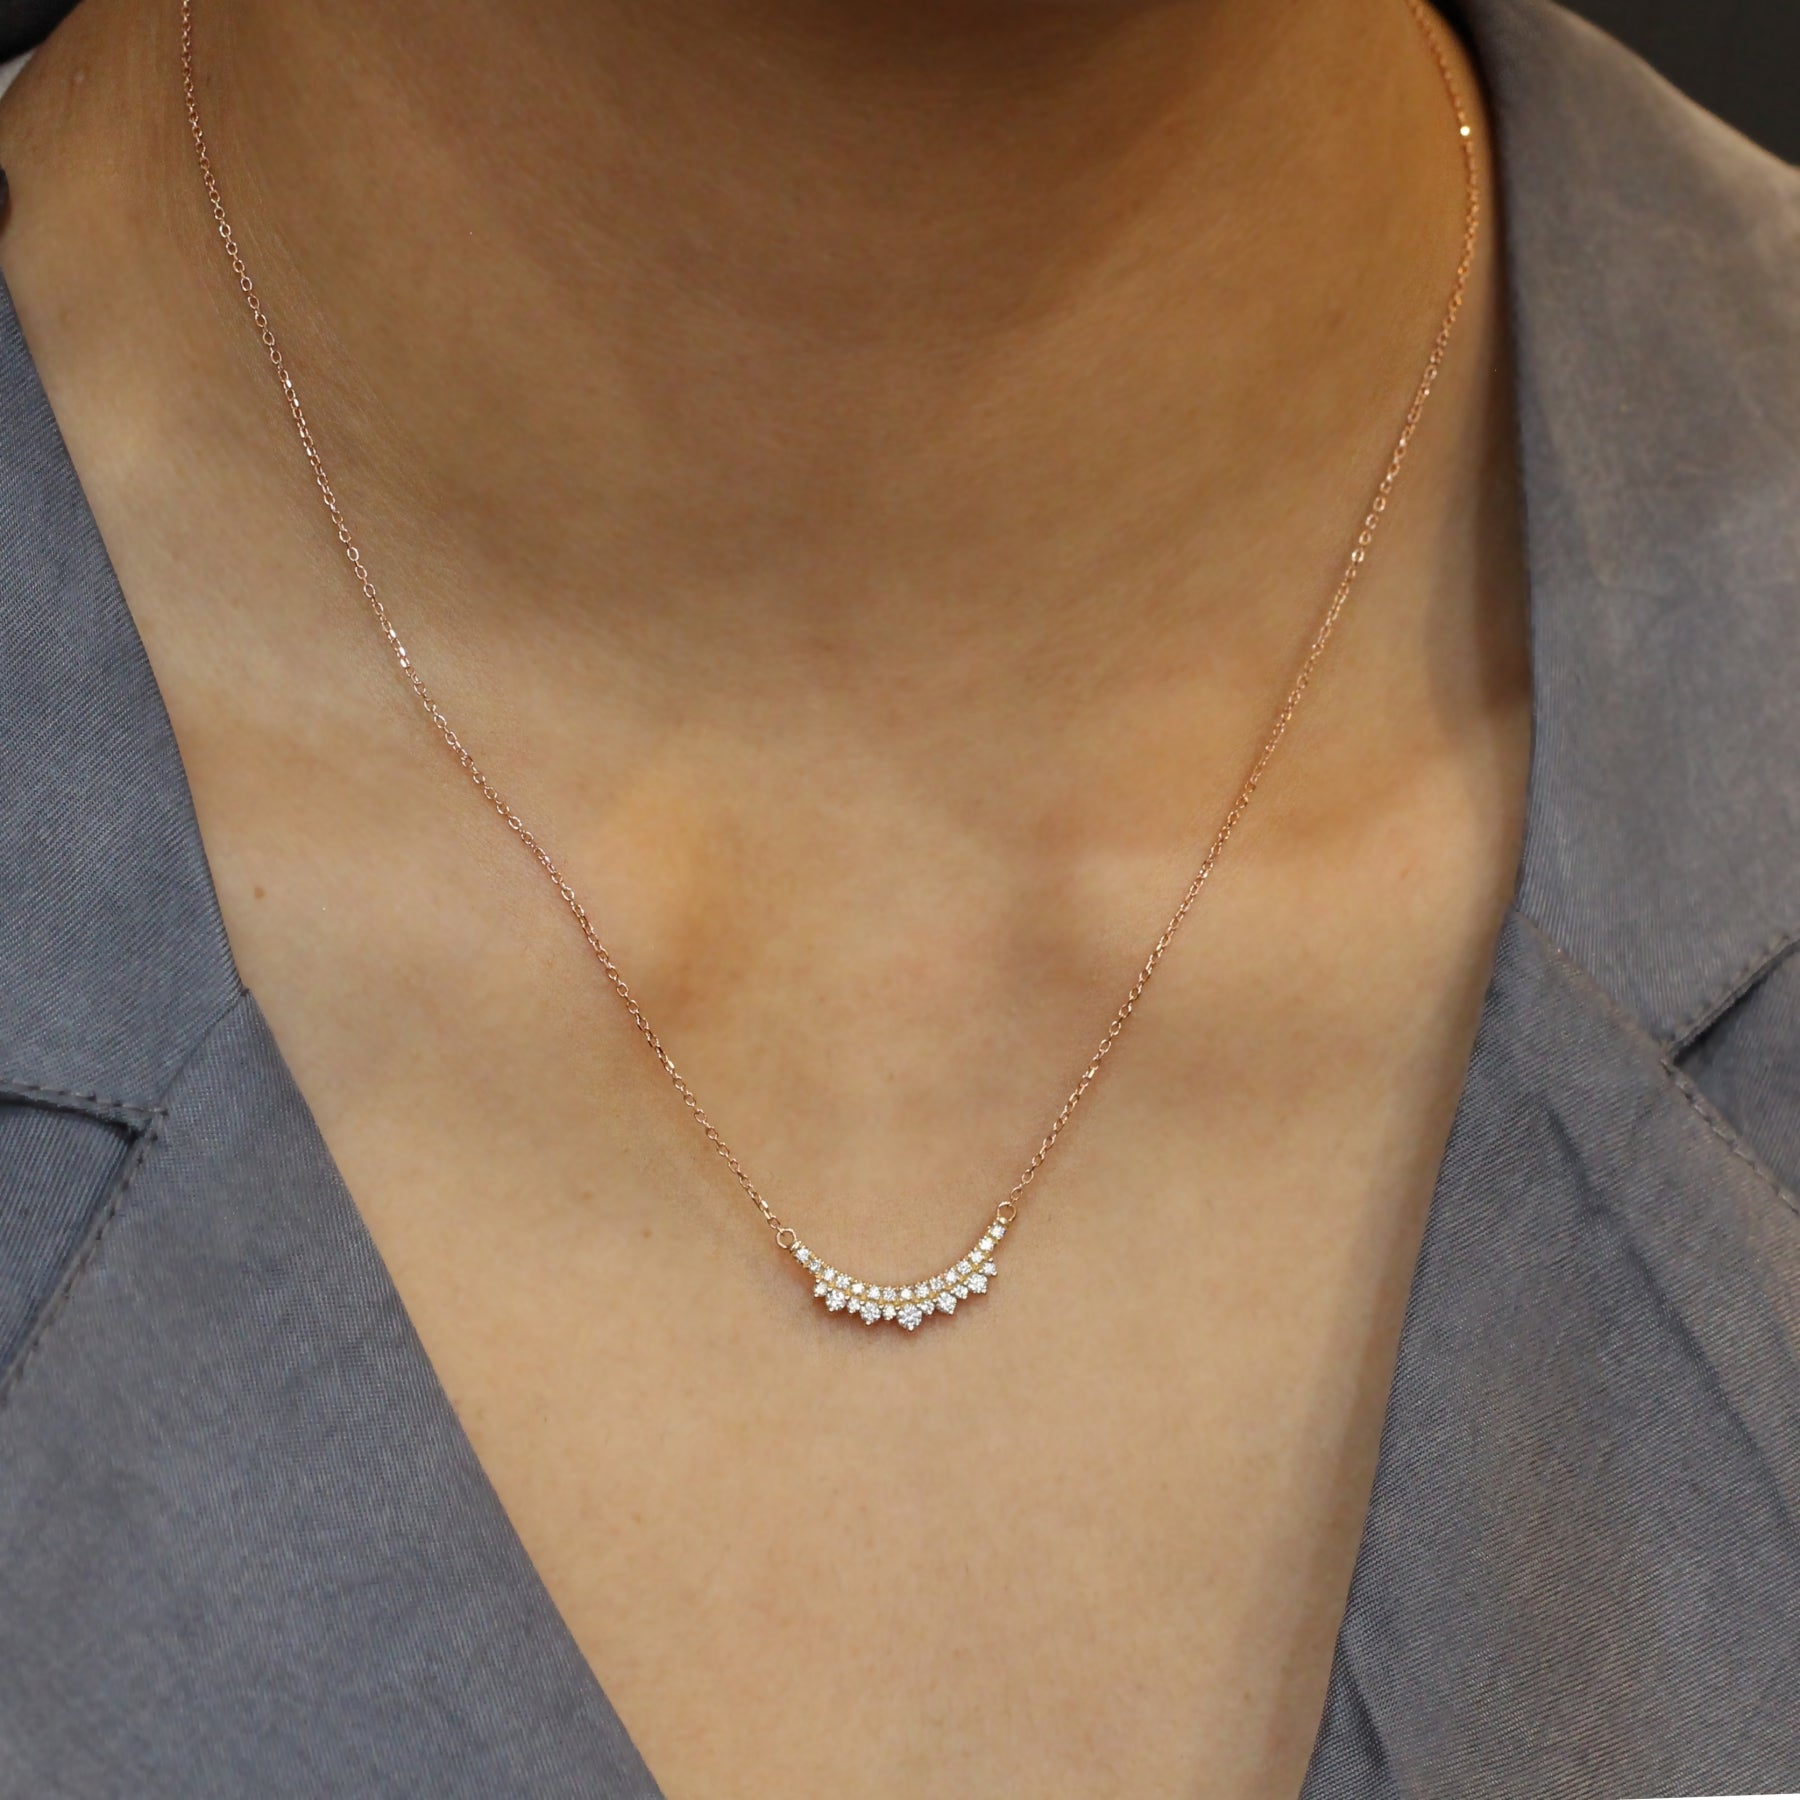 Crown diamond necklace rose gold drop pendant la more design jewelry